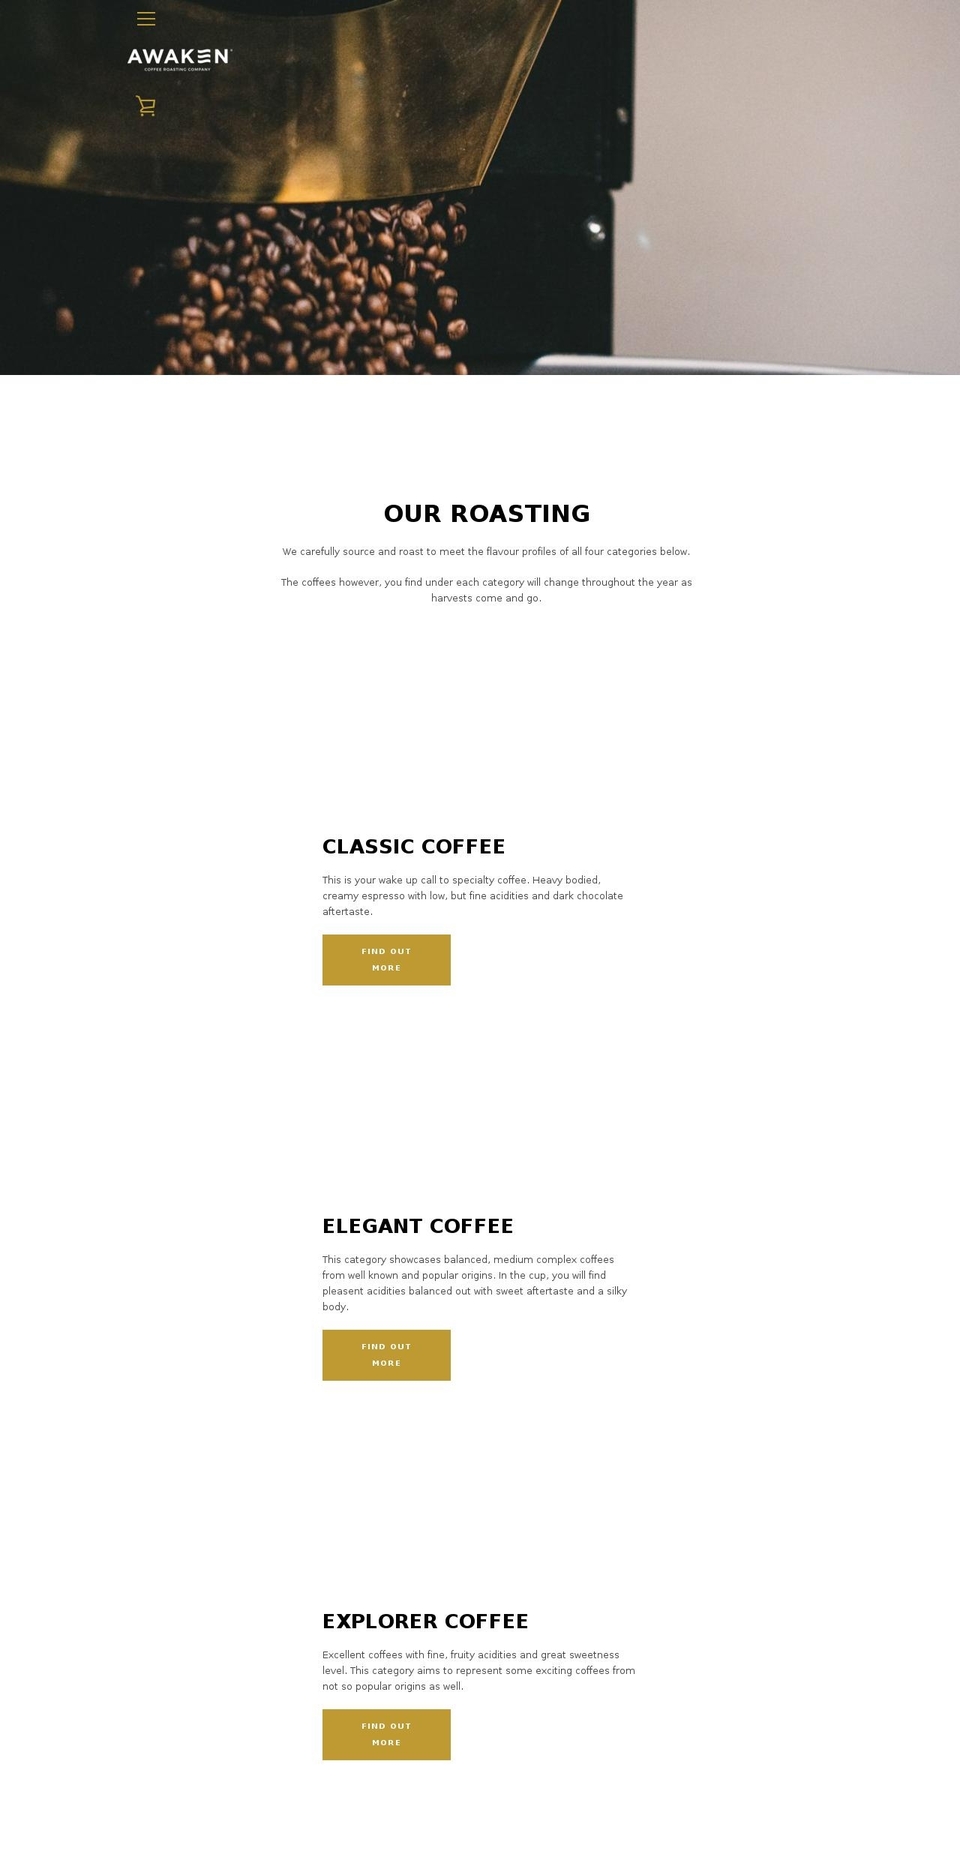 awakencoffeeroasting.com shopify website screenshot